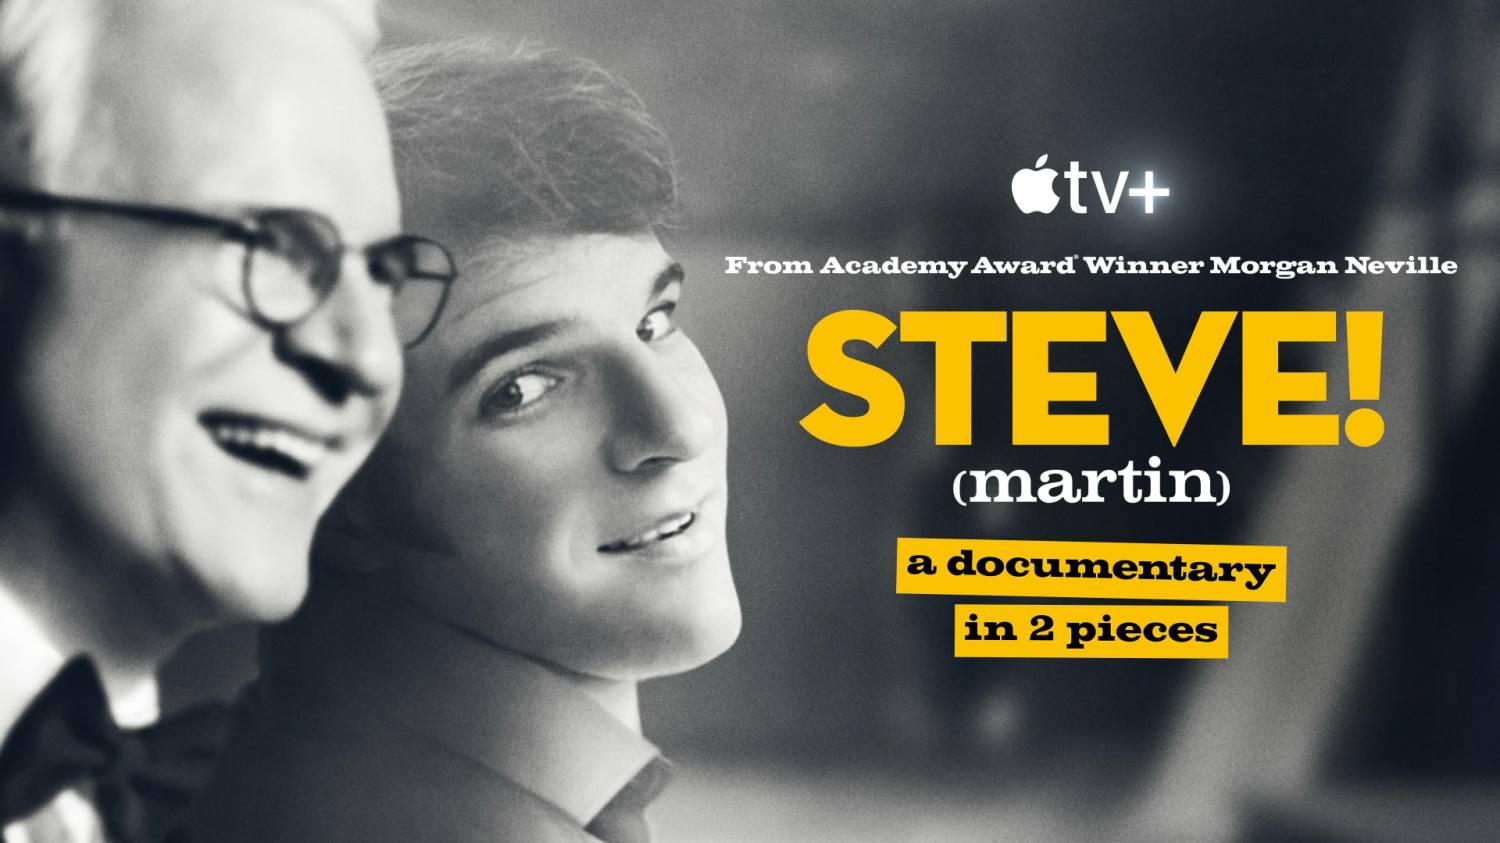 STEVE! (martin) a documentary in 2 pieces Apple TV Plus